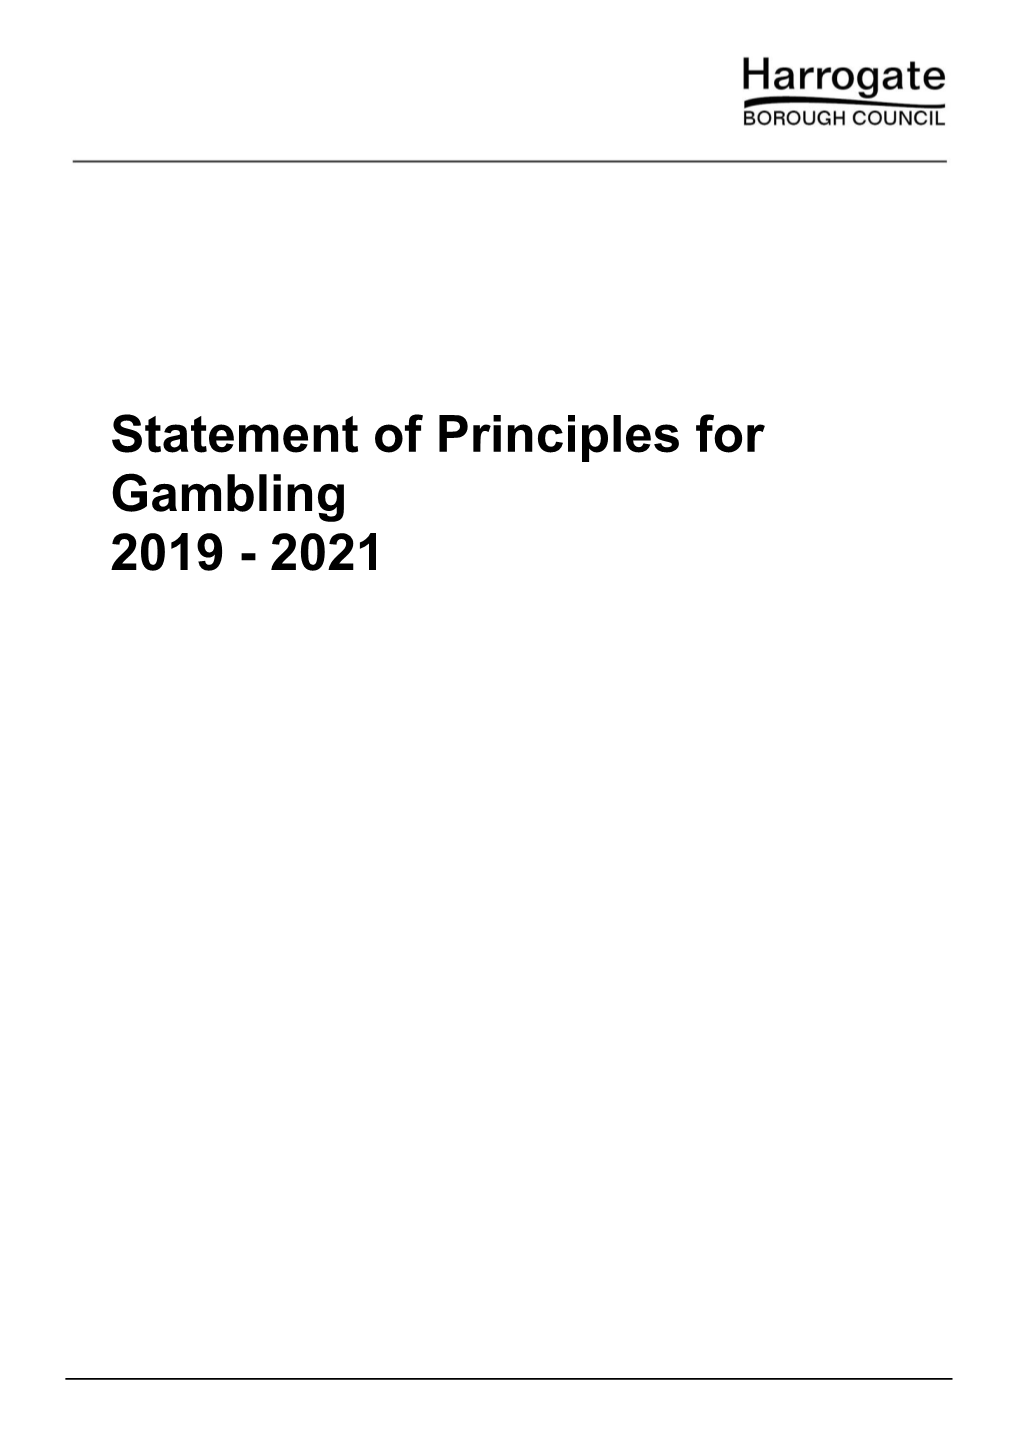 Download: Statement of Principles for Gambling 2019-2021